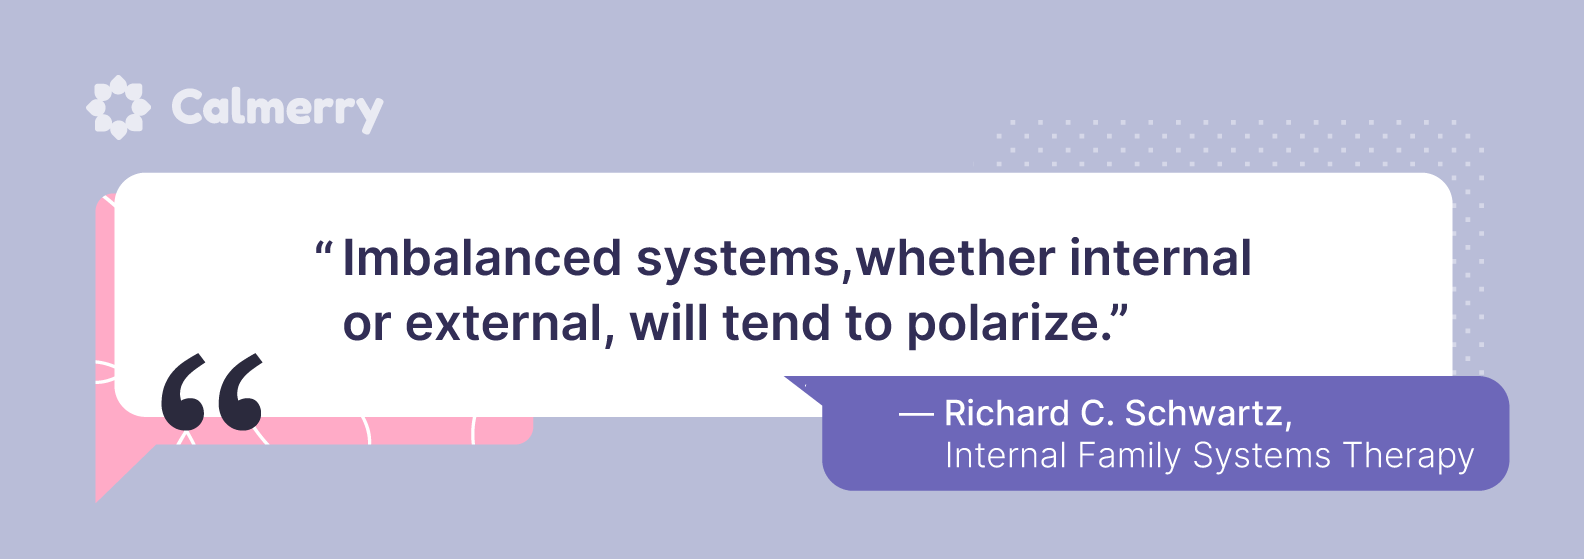 Richard C. Schwartz, Internal Family Systems Therapy